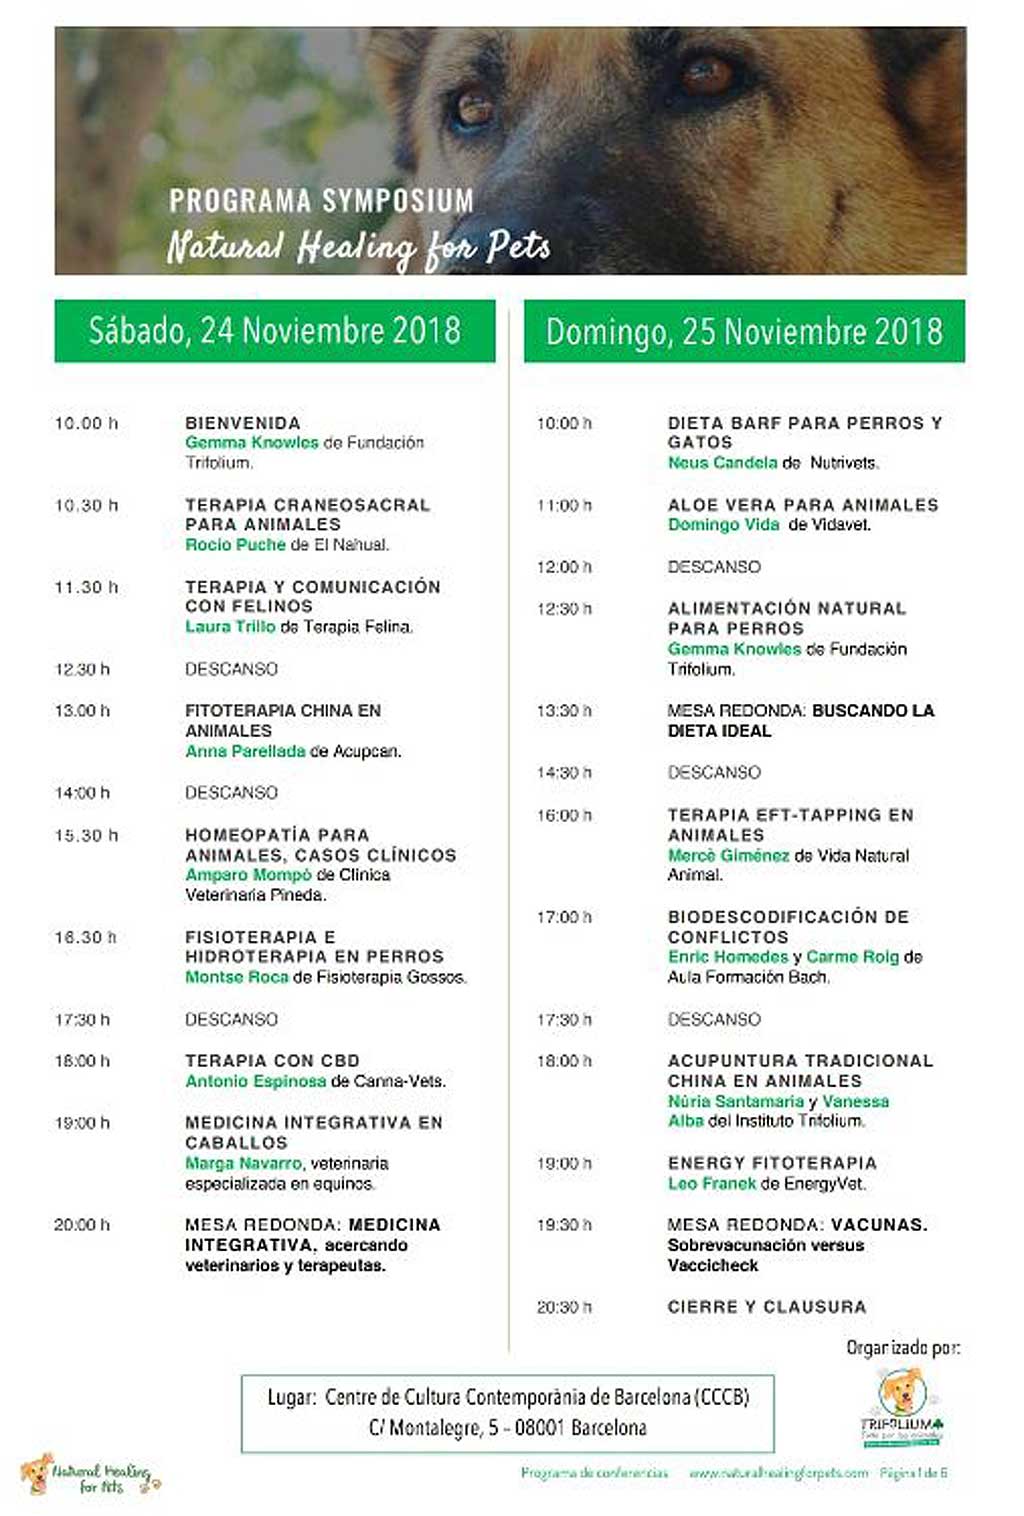 Natural Healing for Pets Symposium 2018. 24-25 de noviembre, en Barcelona.